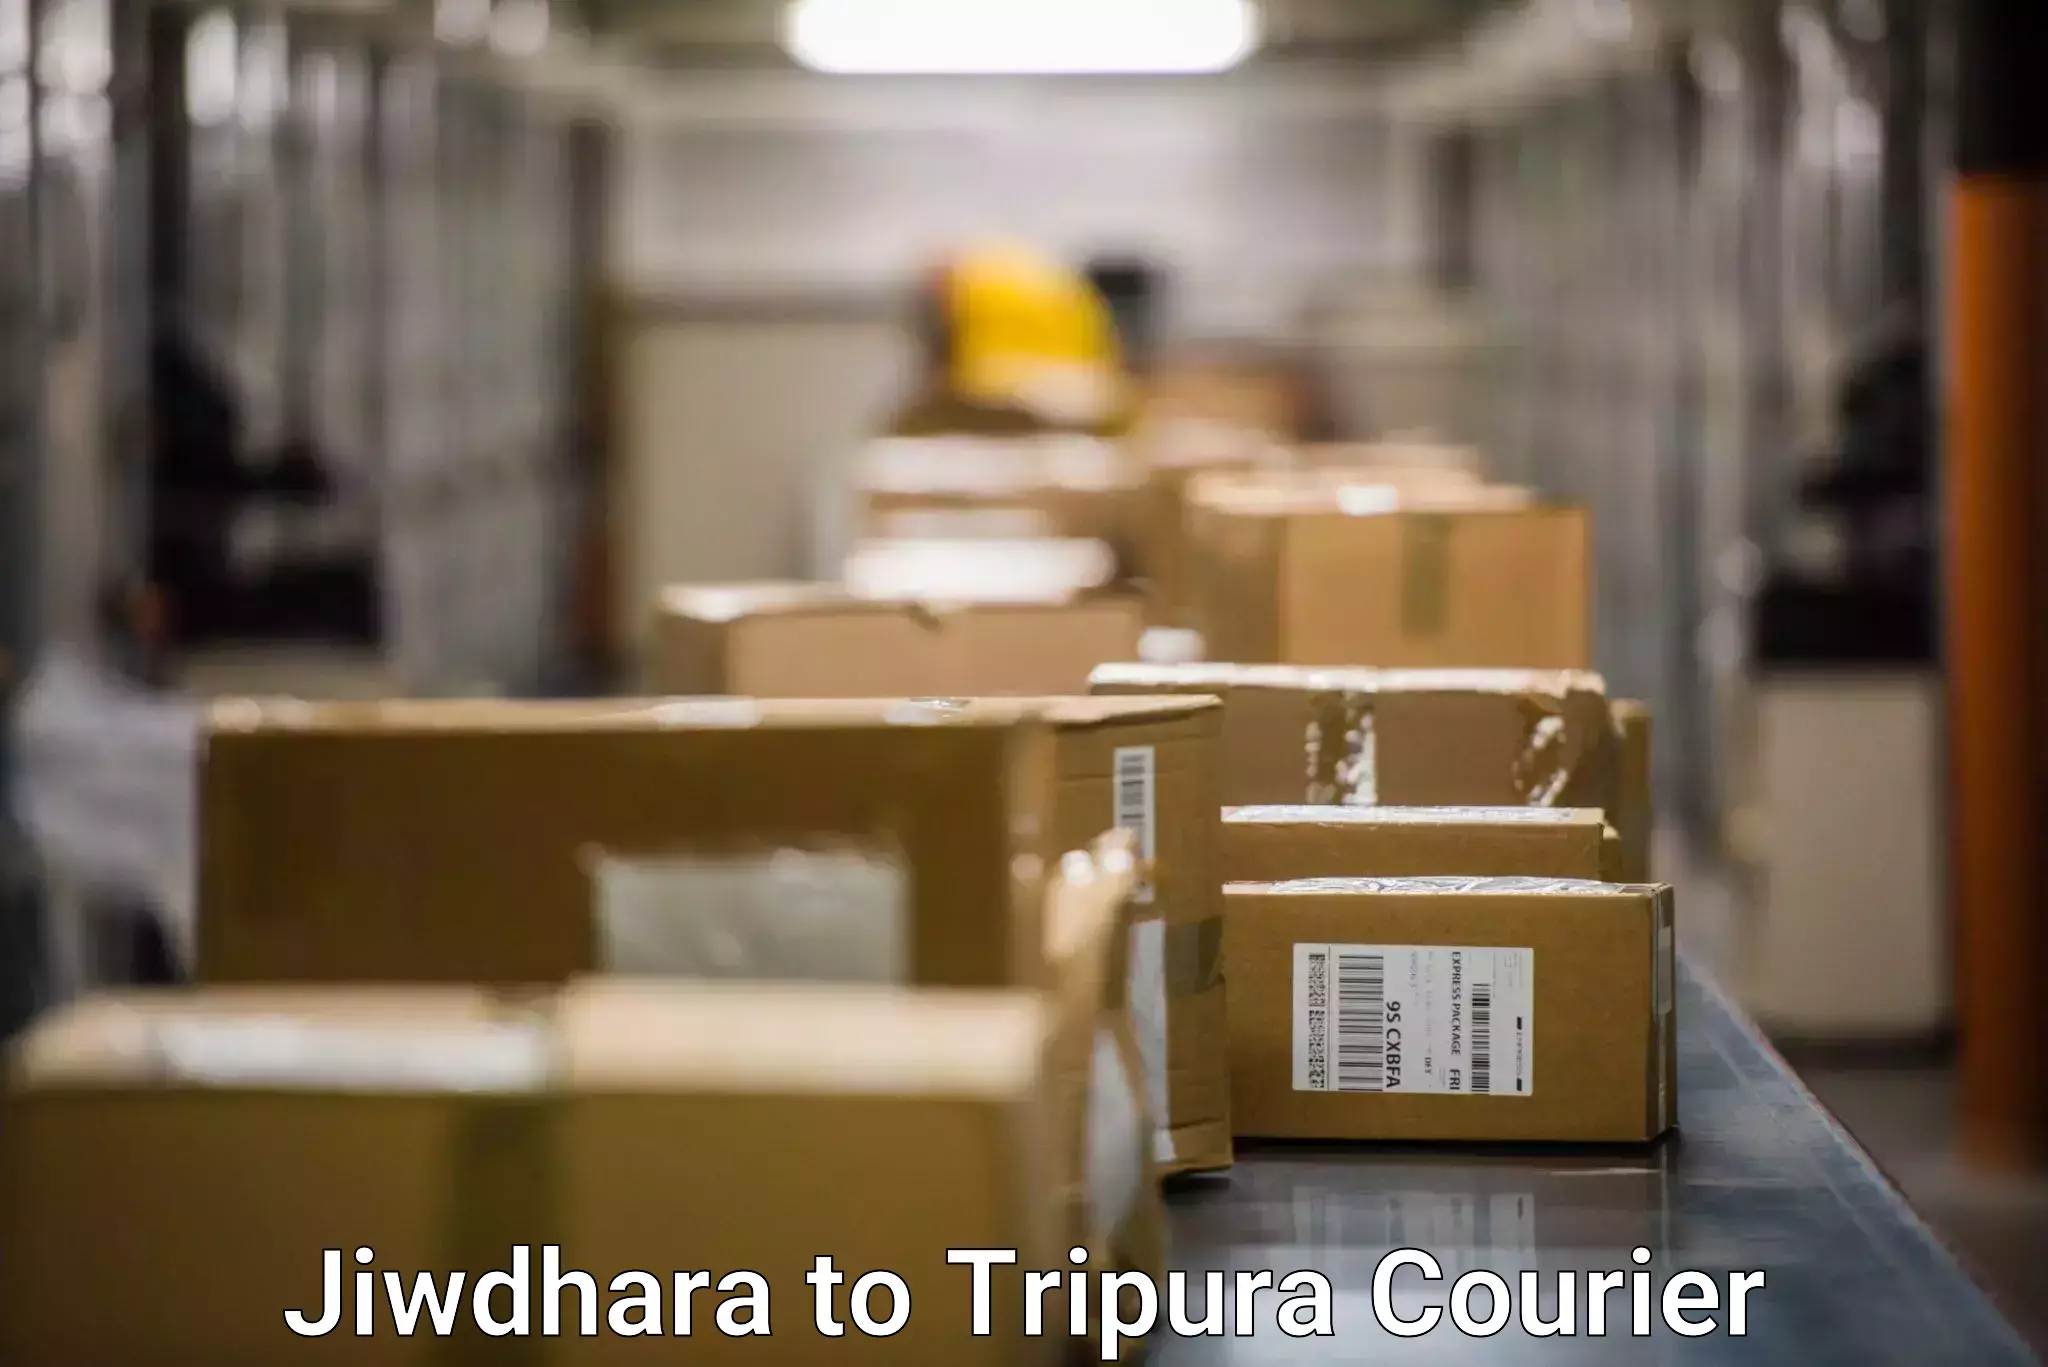 Shipping and handling Jiwdhara to Agartala